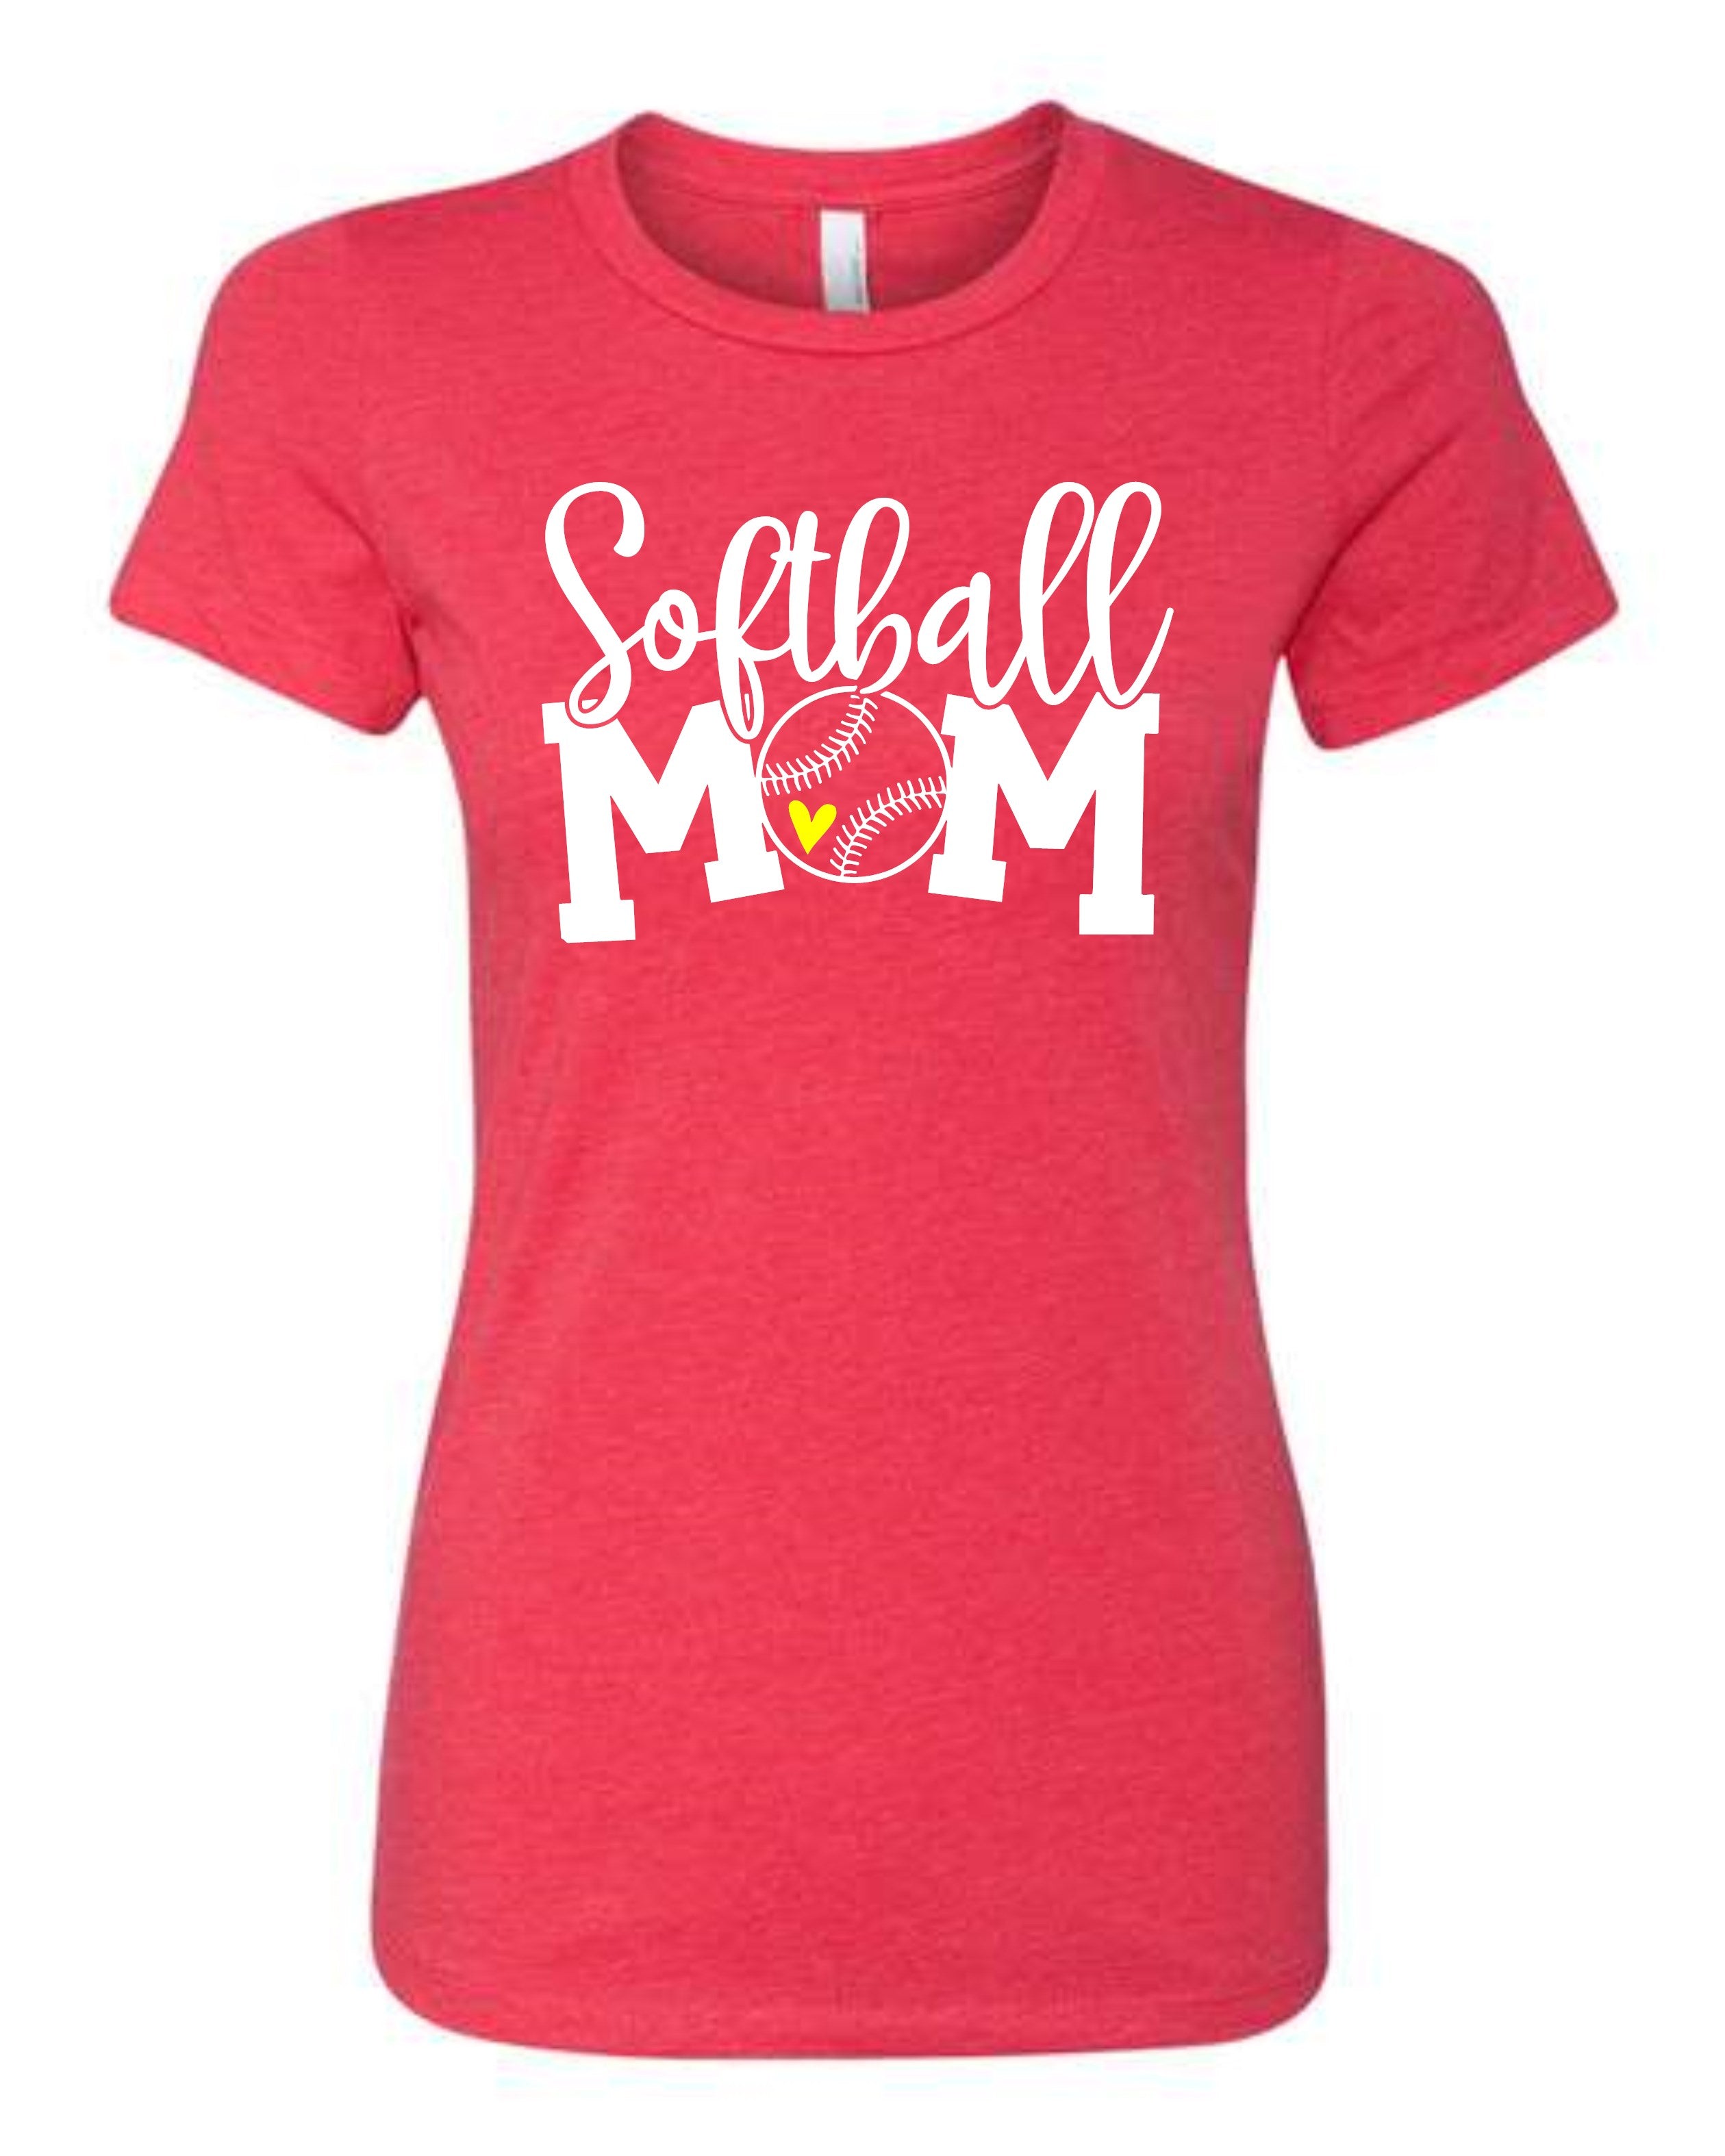 Softball Mom - WOMEN'S CUT